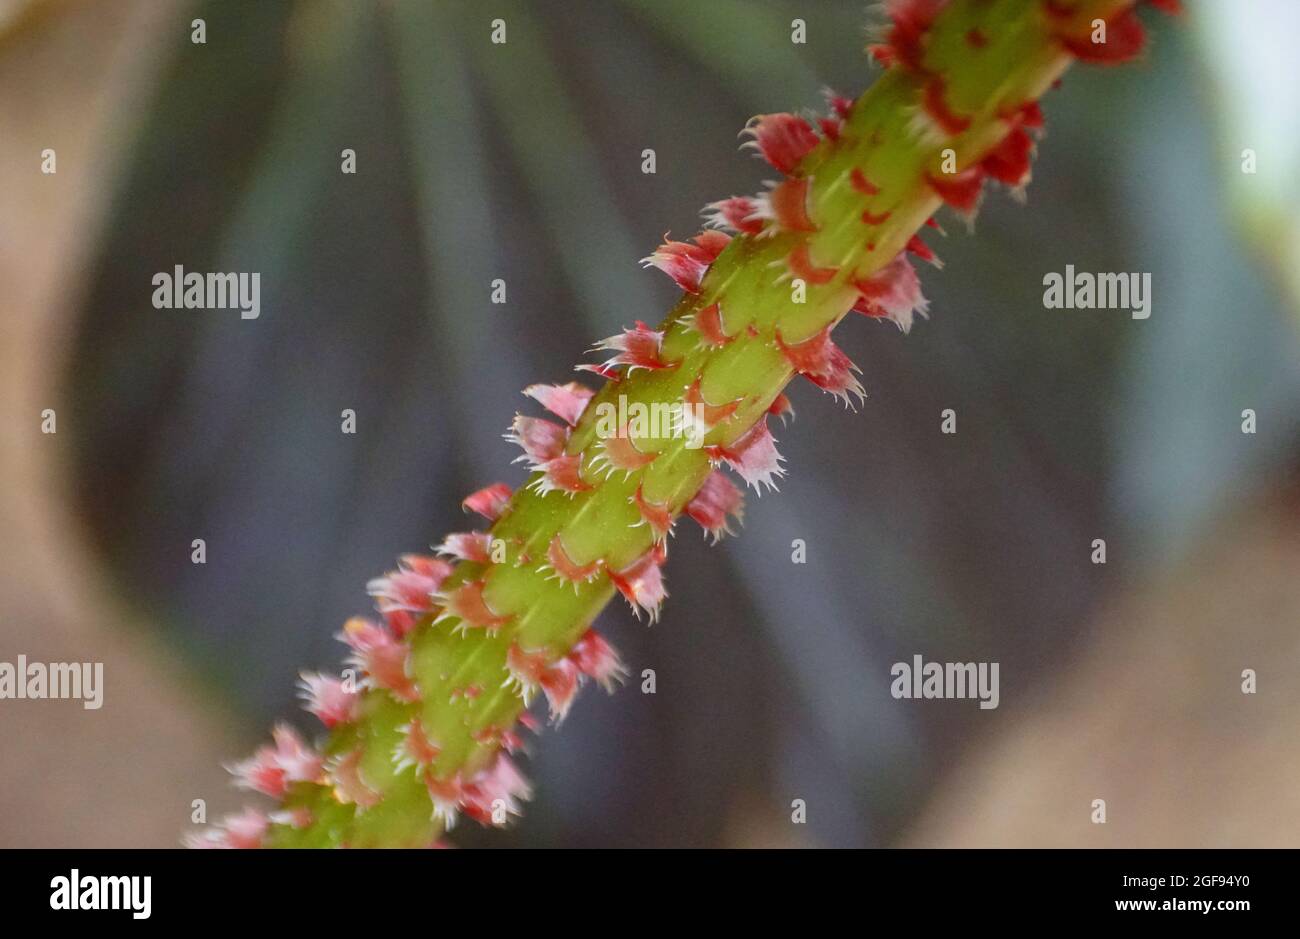 A hairy red stem of Rhizomatous Begonia plant Stock Photo